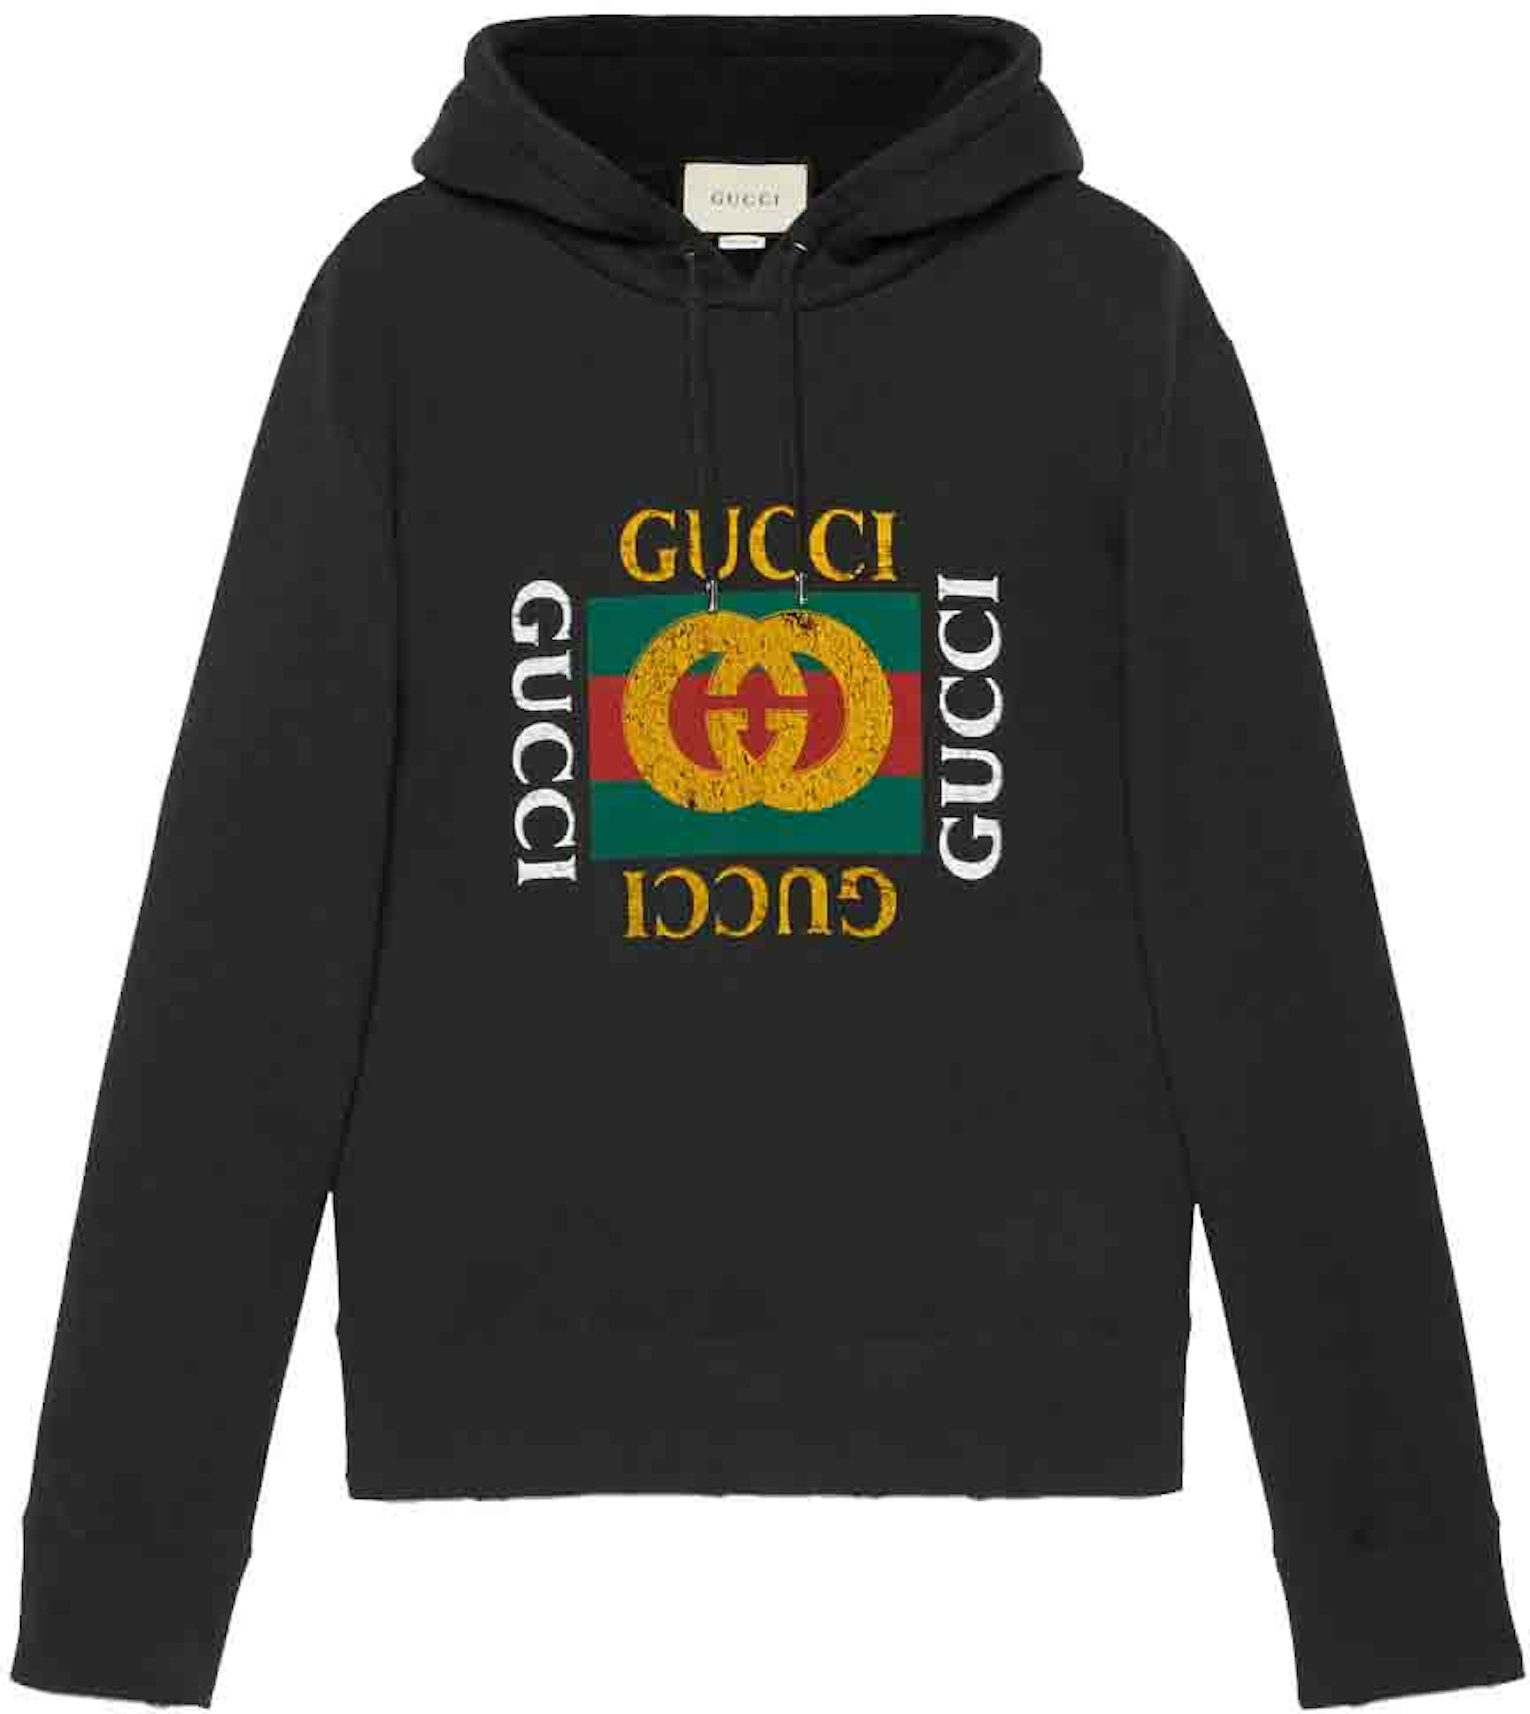 Bestået Undervisning Mona Lisa Gucci Oversize Sweatshirt with Gucci Logo Black Men's - US